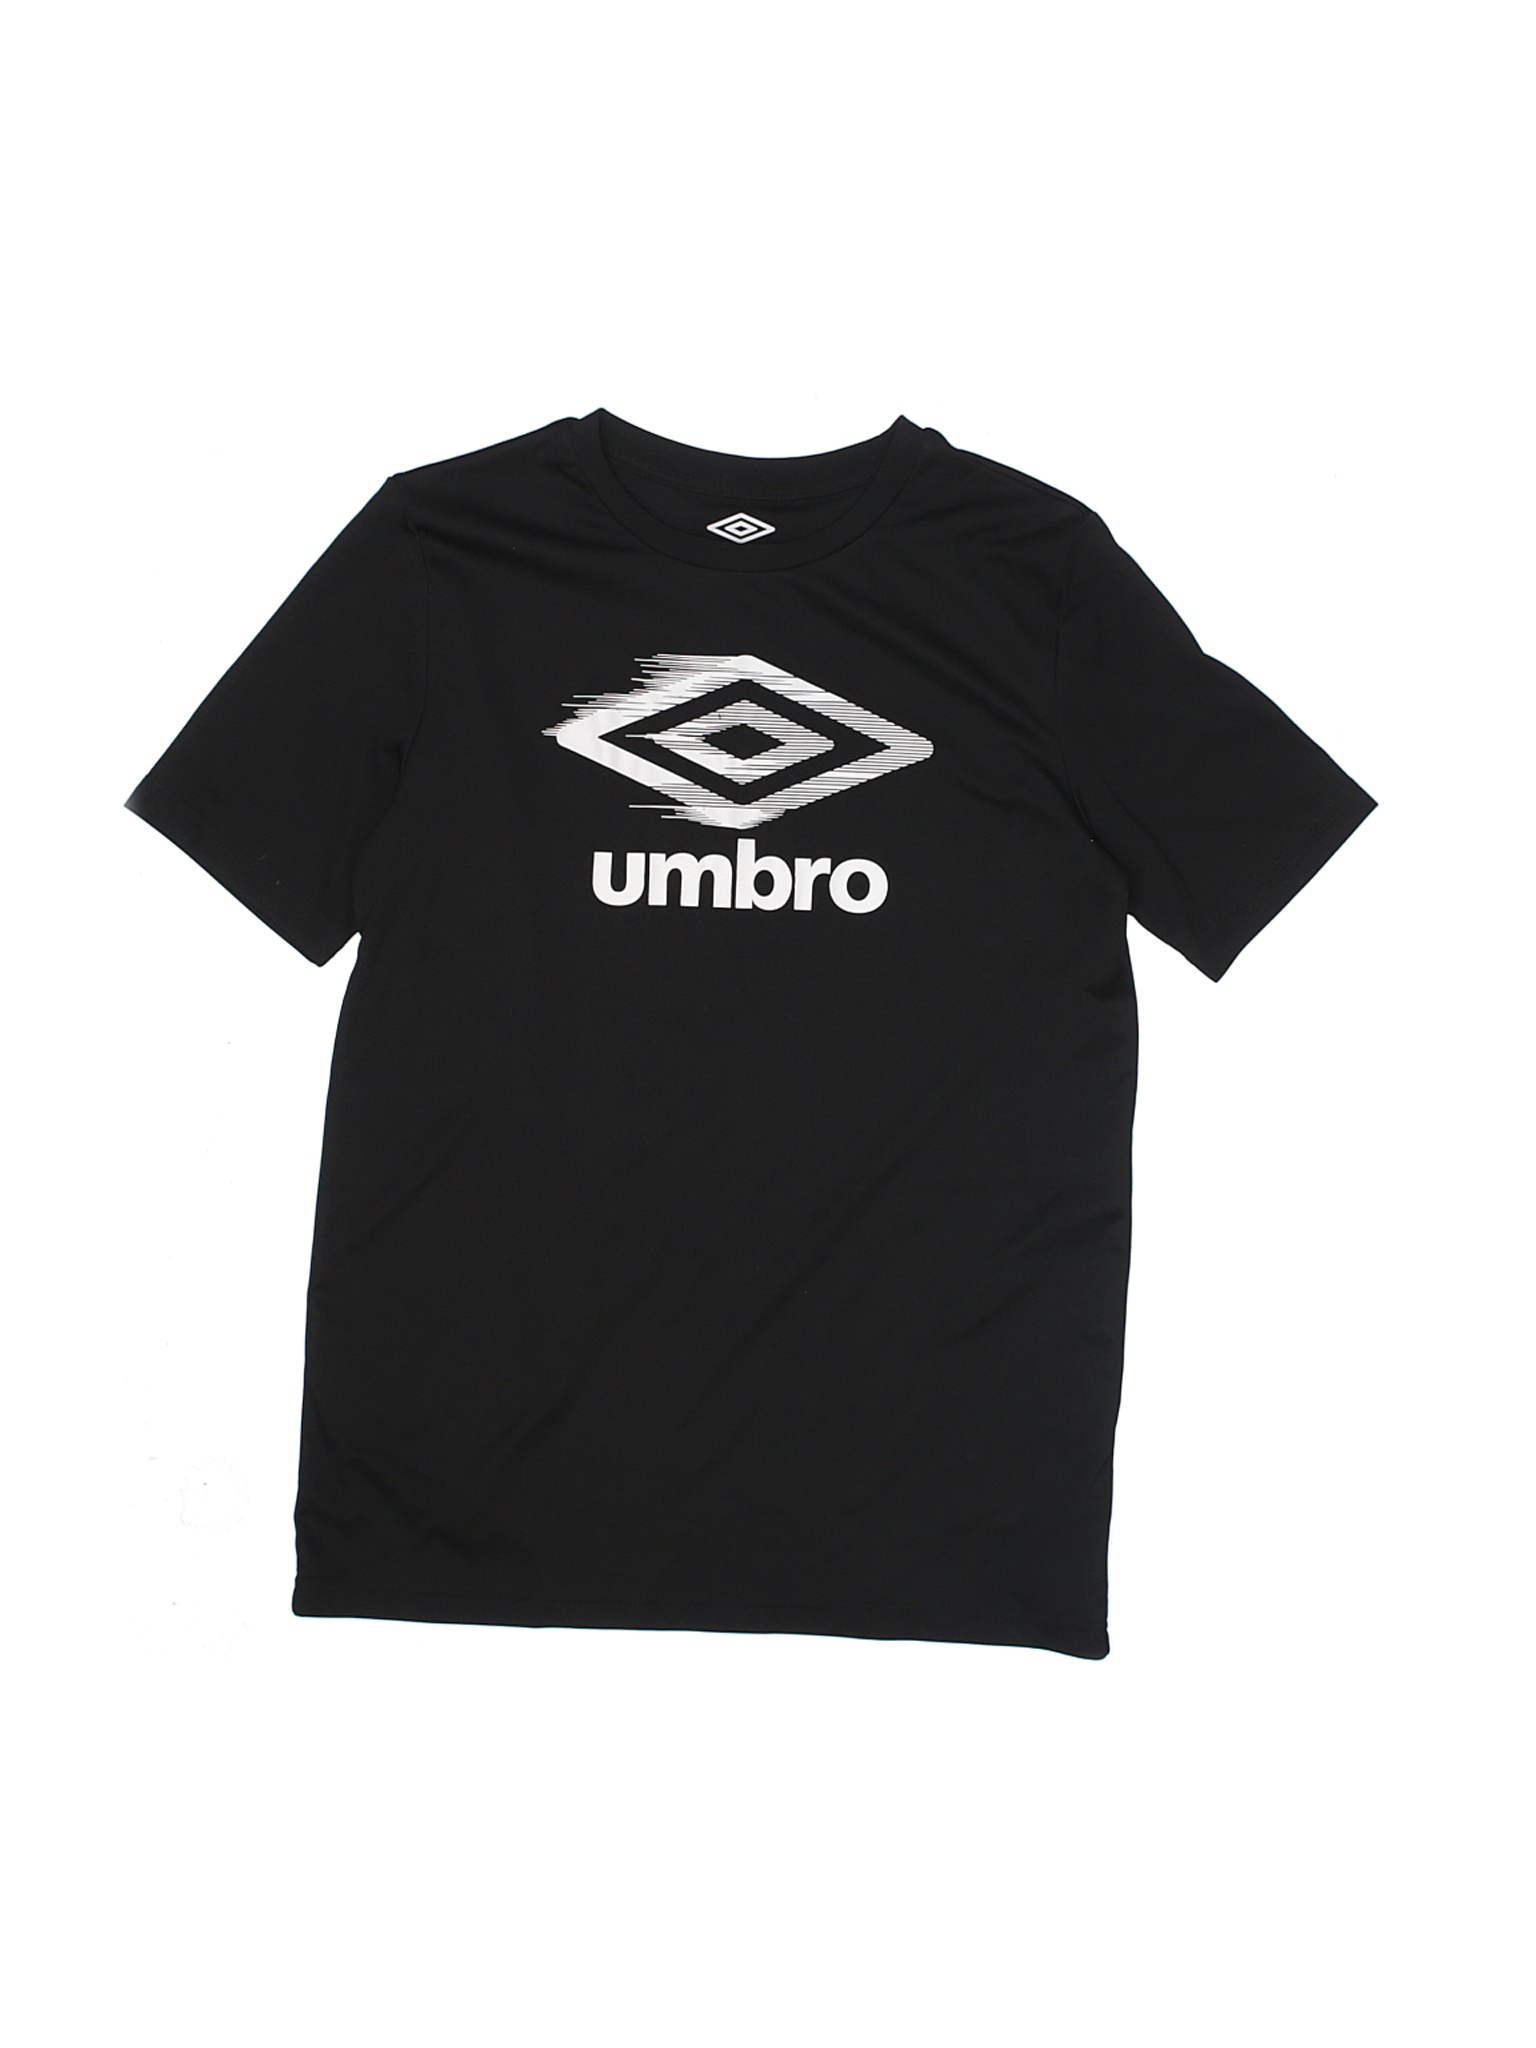 Umbro Boys Black Active T-Shirt 12 | eBay